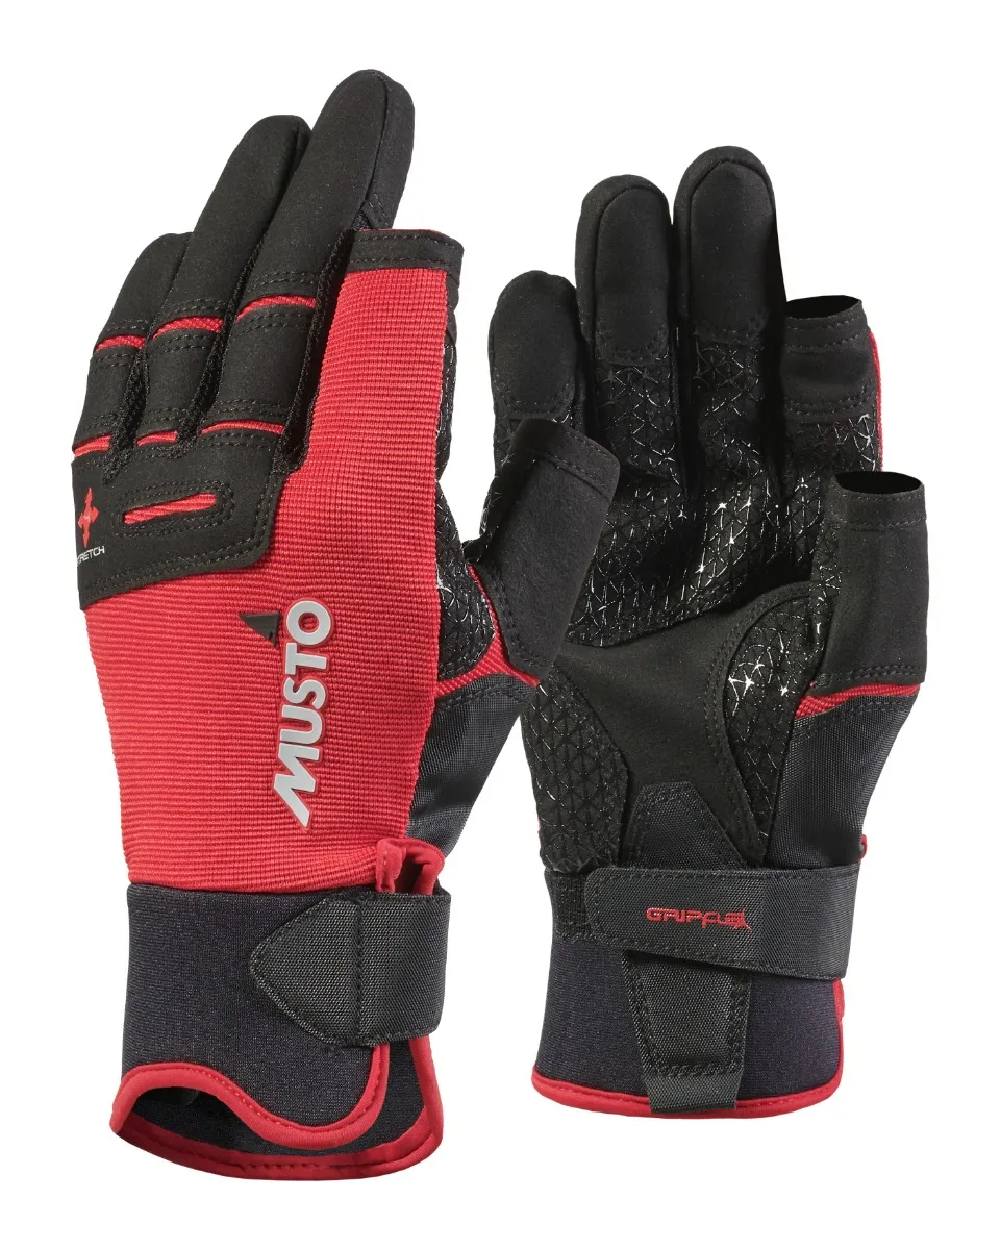 Musto Performance Long Finger Gloves in True Red 